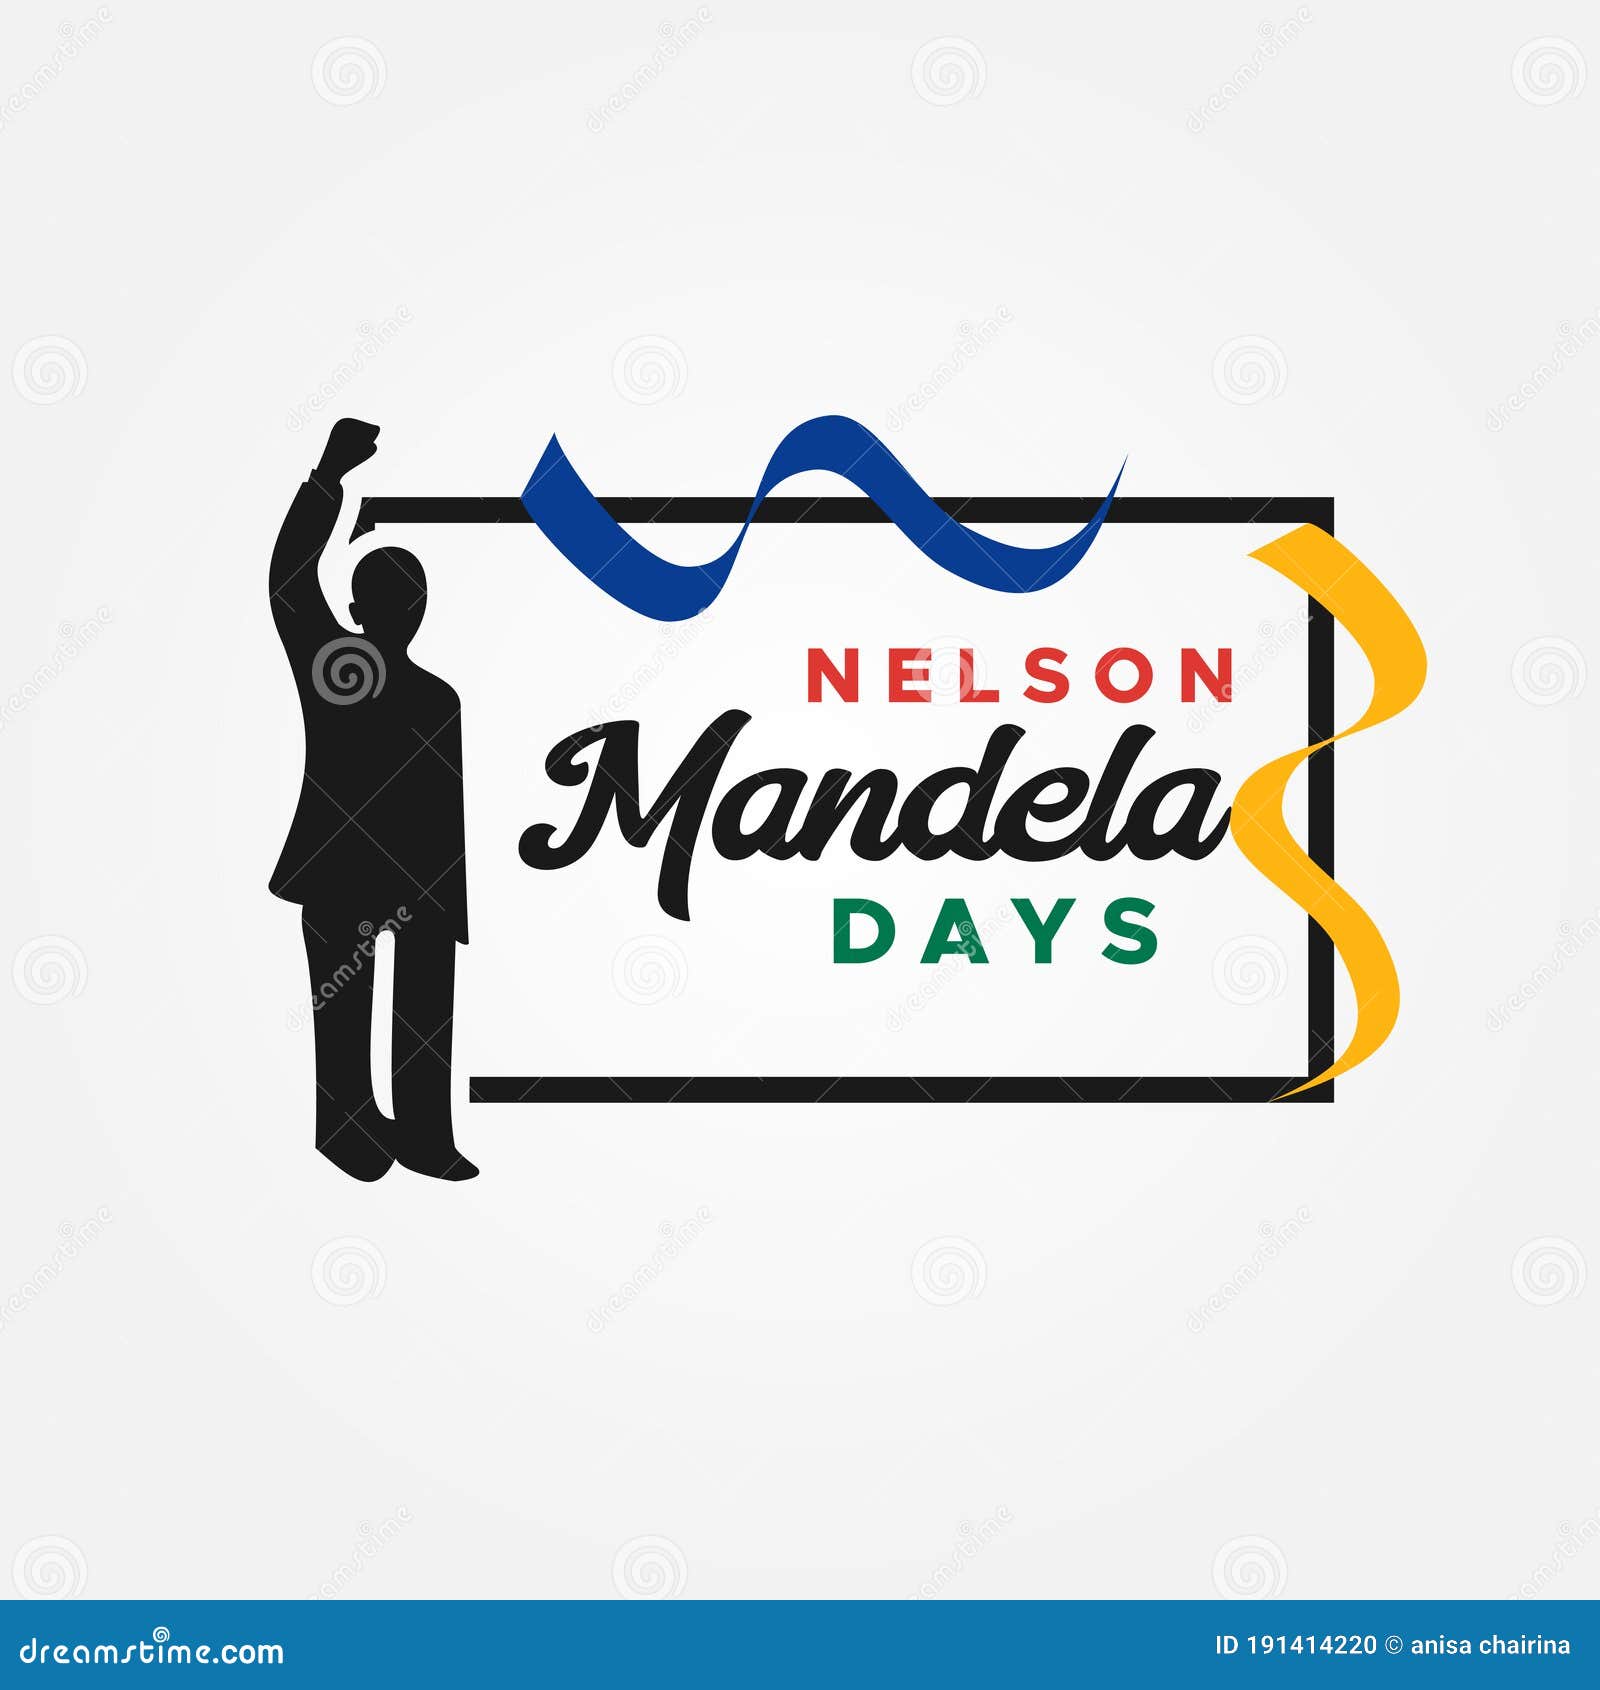 International Nelson Mandela Day Vector Design Illustration For Celebrate Moment Editorial Image Illustration Of Judge Text 191414220